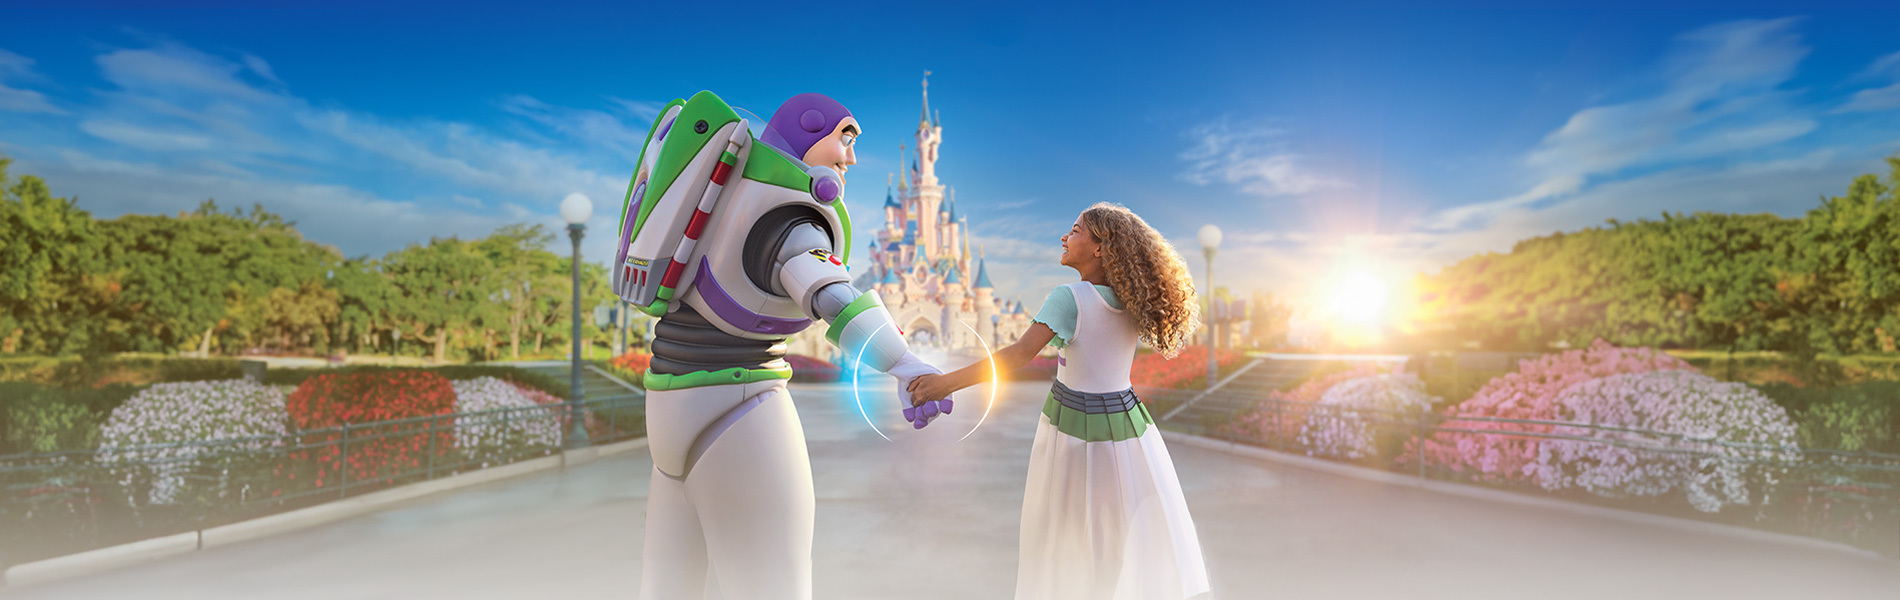 Buzz Lightyear and girl on mainstreet at Disneyland